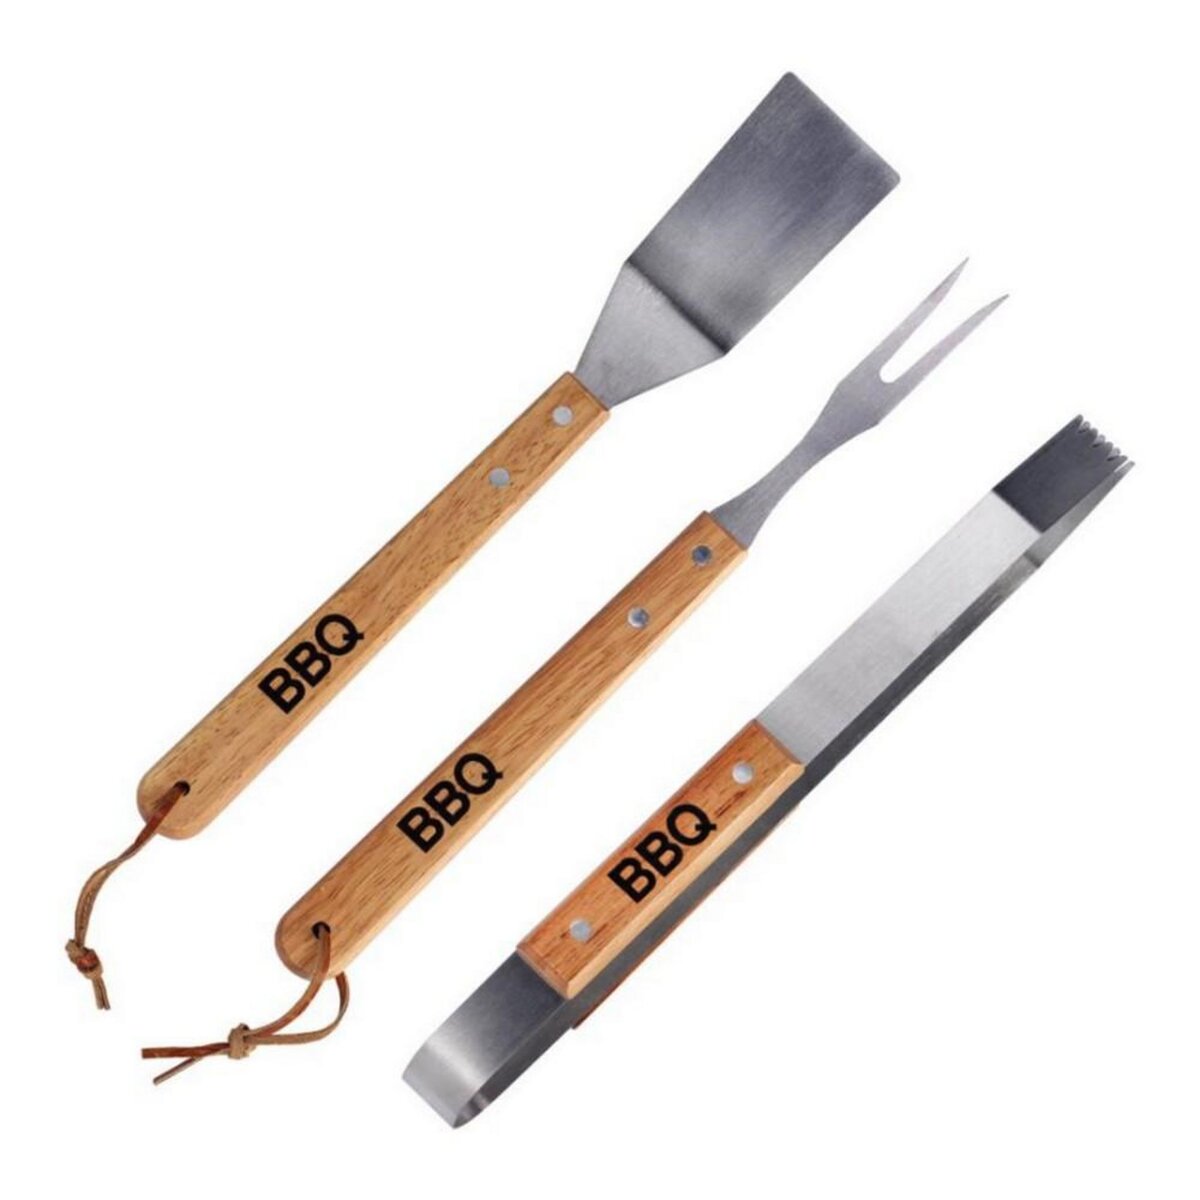 Kit complet barbecue plancha pince fourchette spatule Bois Inox pas cher 